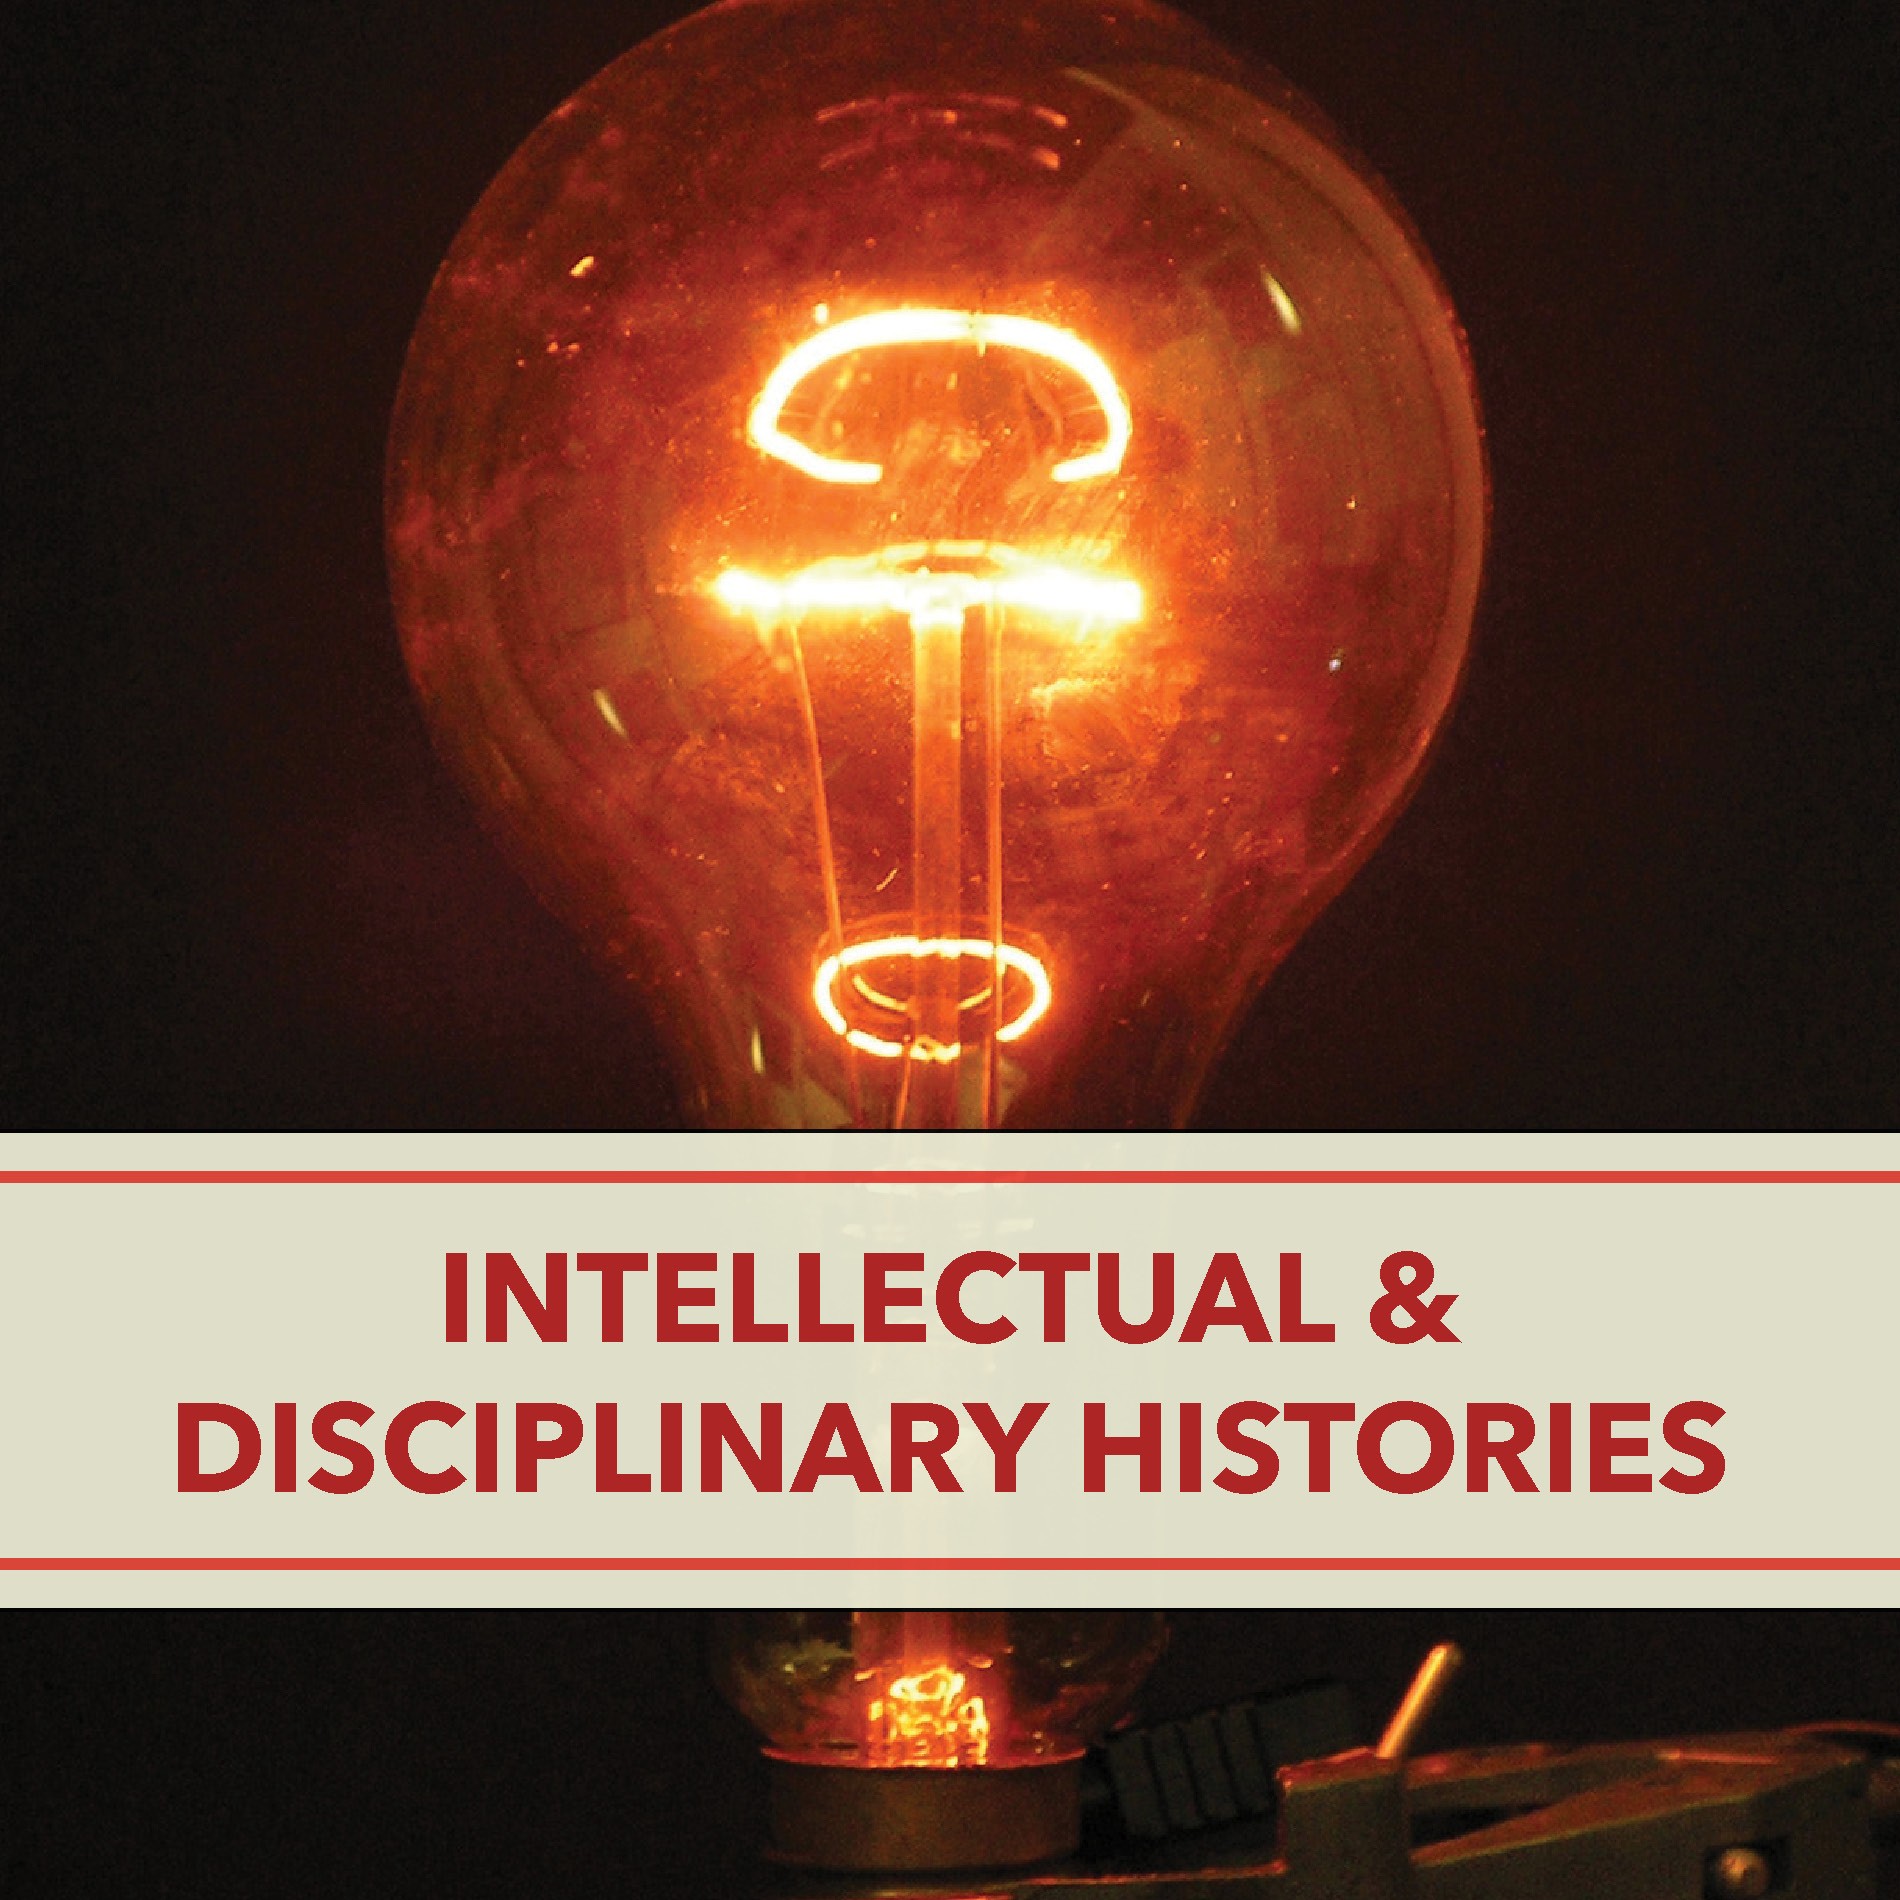 INTELLECTUAL & DISCIPLINARY HISTORIES